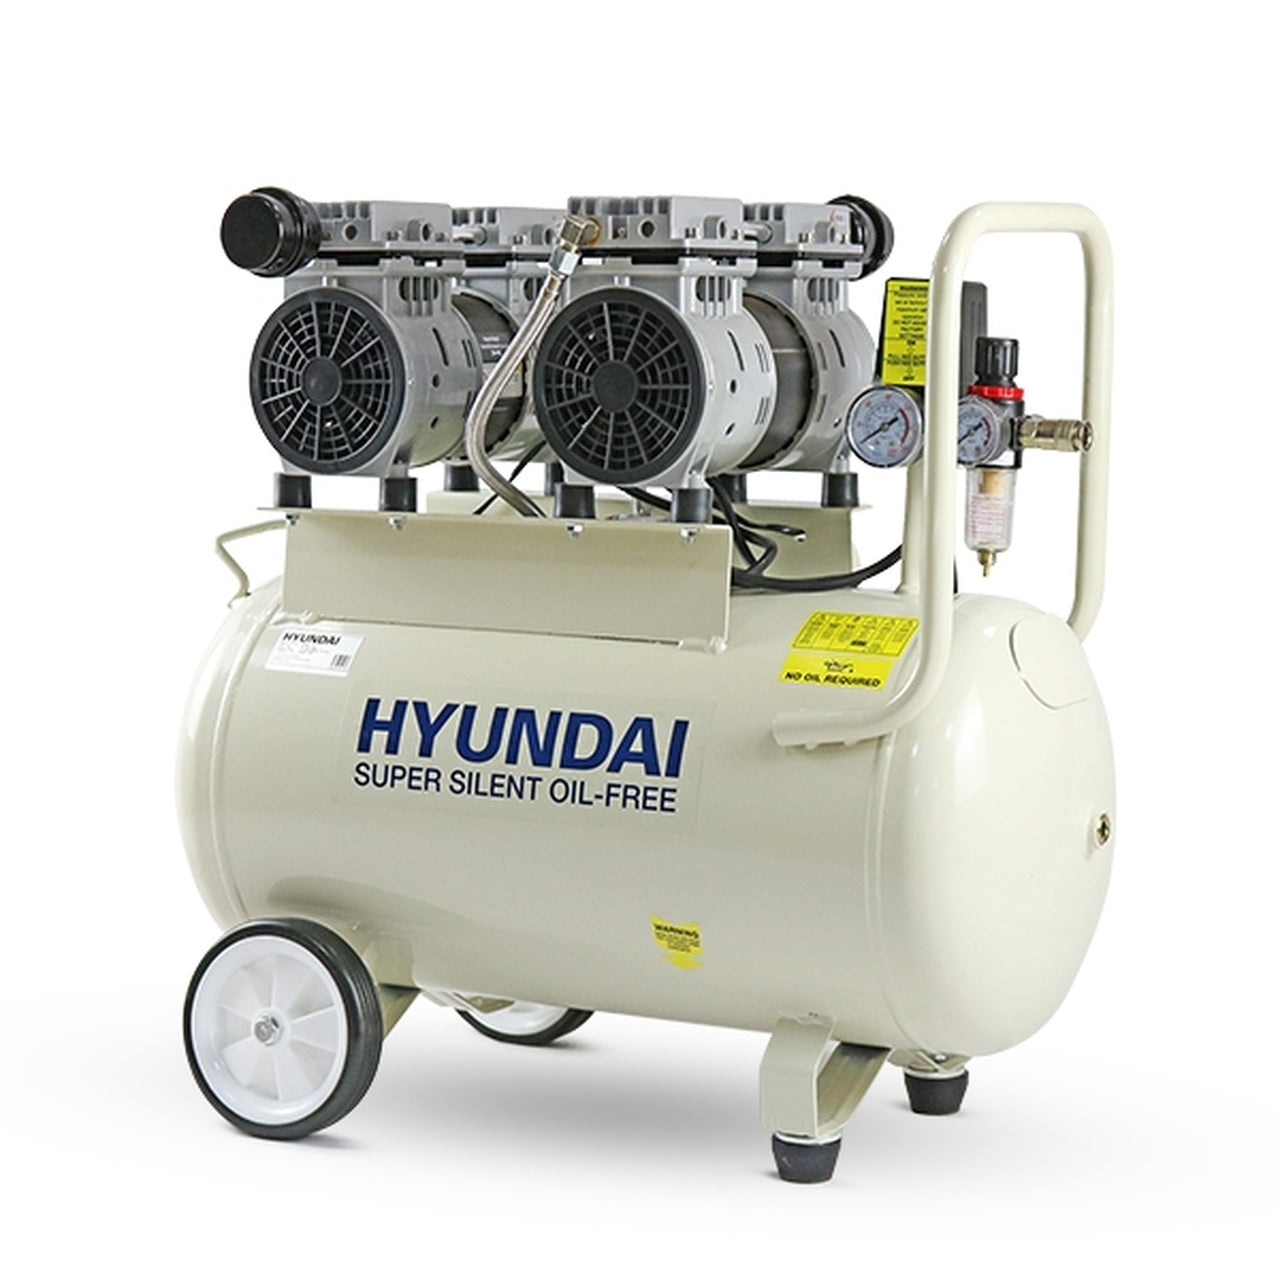 Hyundai-HY27550-50-Litre-Oil-Free-Air-Compressor,-11CFM/100psi,-Low-Noise---2hp